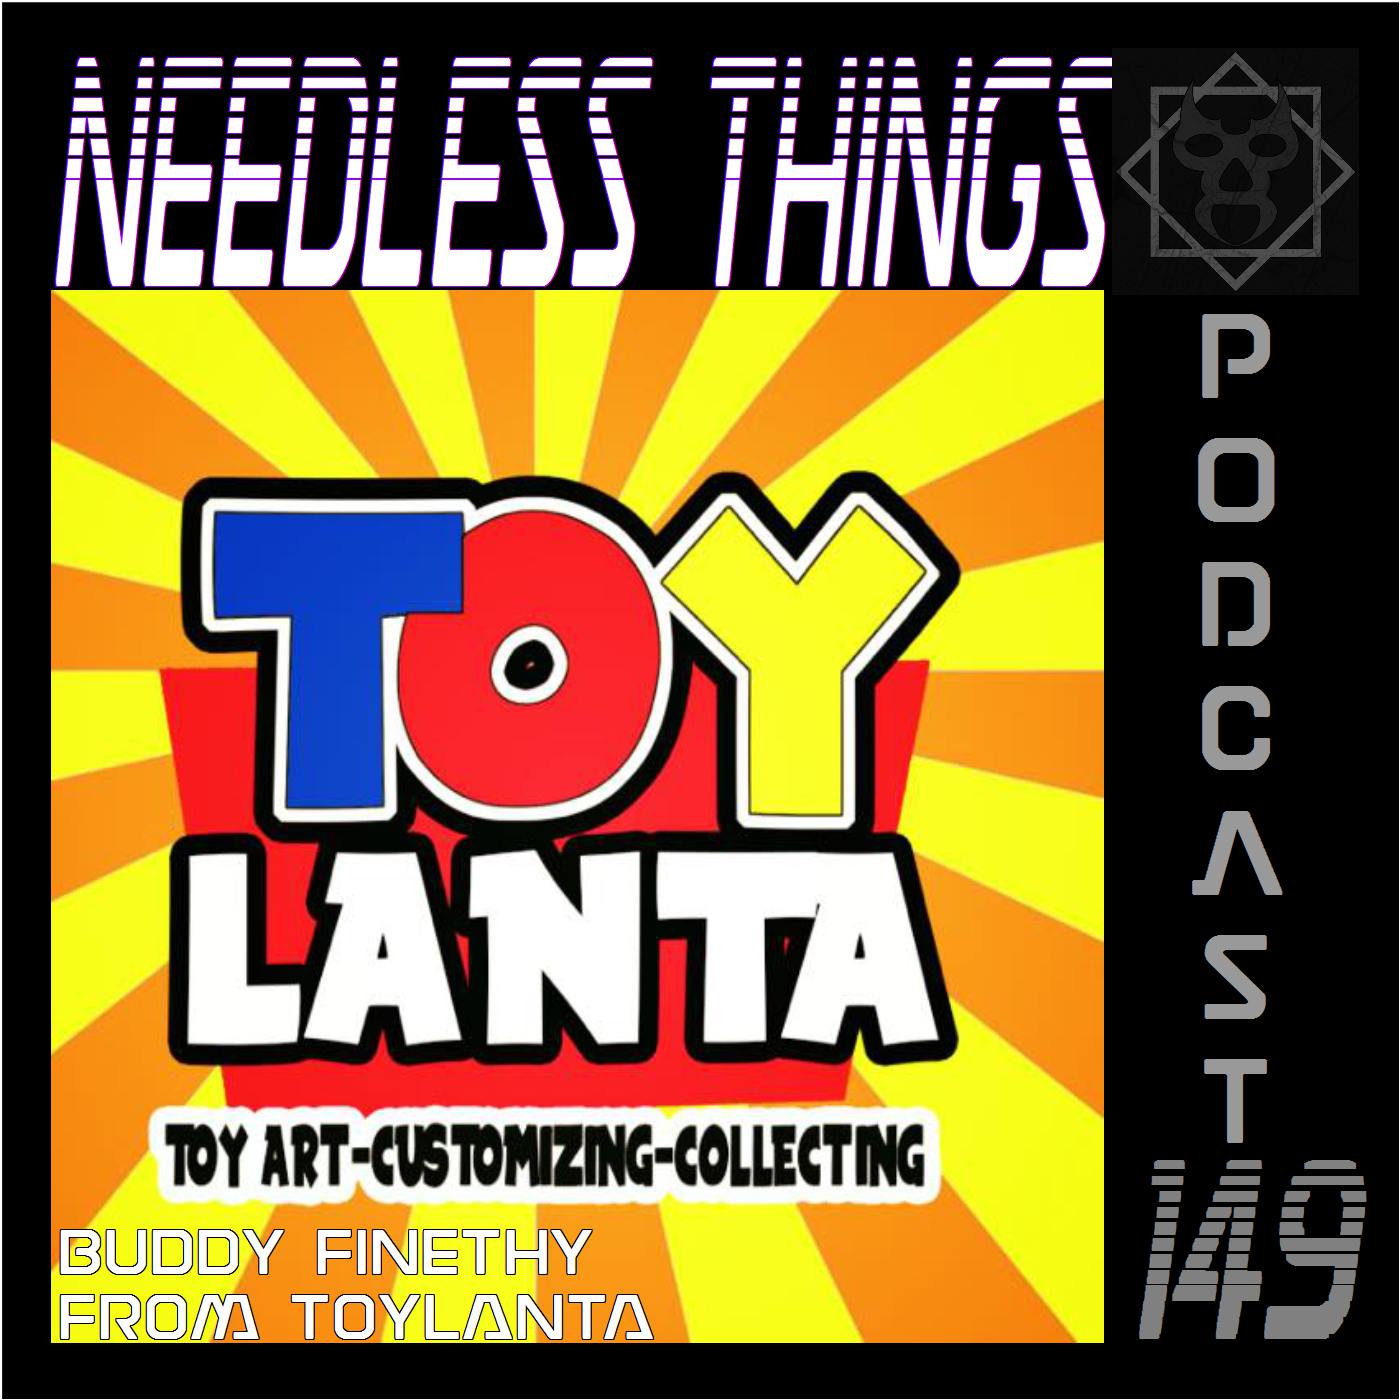 Needless Things Podcast 149 – Buddy Finethy from Toylanta